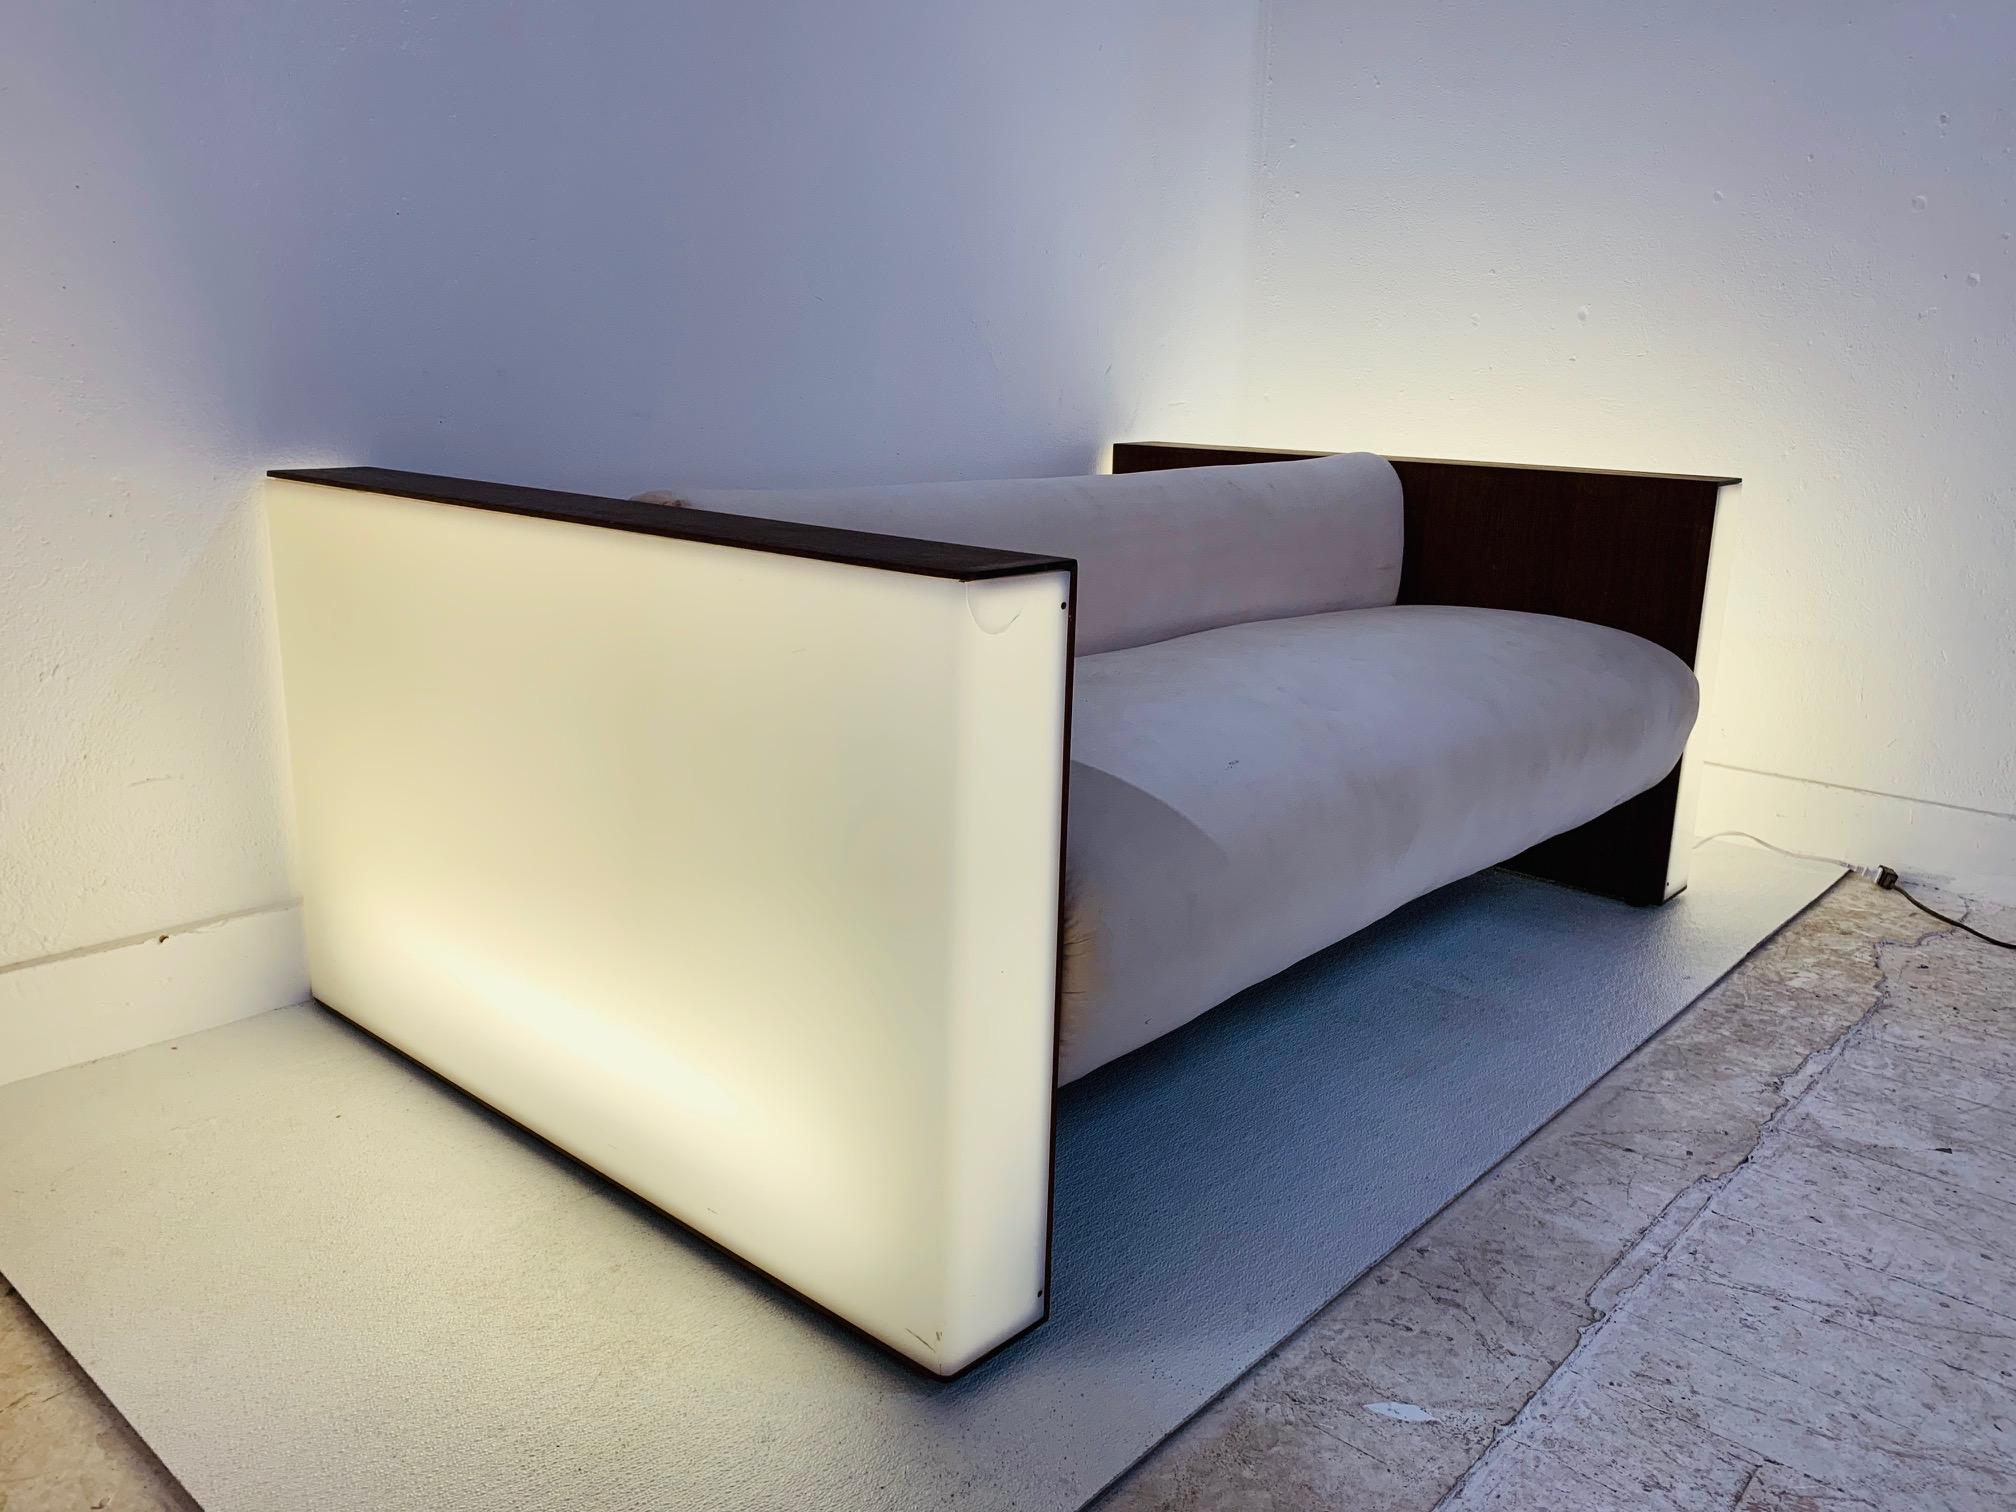 Vladimir Kagan Illuminated Double Sided Sofa. Has a walnut and acrylic frame and the original upholstery. The sides also illuminates.